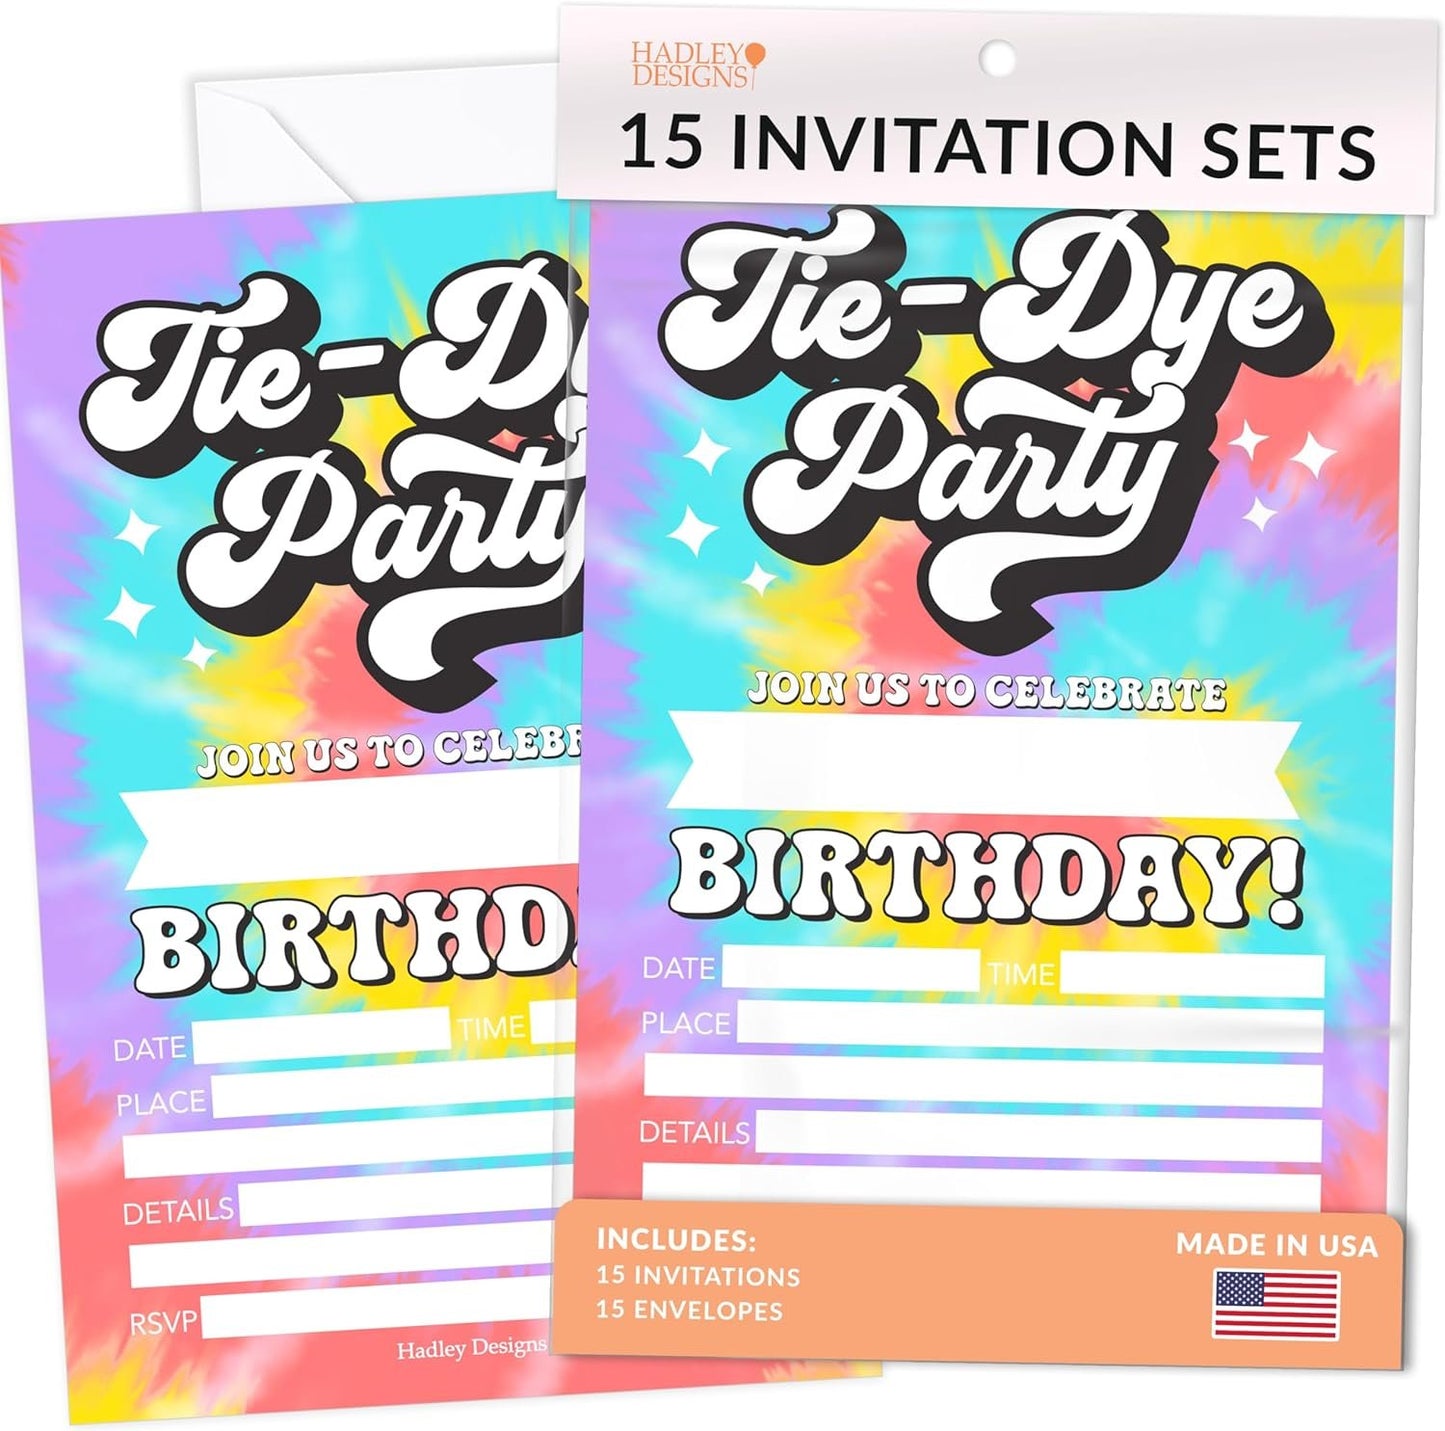 15 Tie Dye Birthday Invitations Girl - Kids Birthday Invitations Boy, Birthday Party Invitations For Boys, Tie Dye Birthday Invites For Boy, Birthday Invitation Cards, Tie Dye Birthday Party Invites